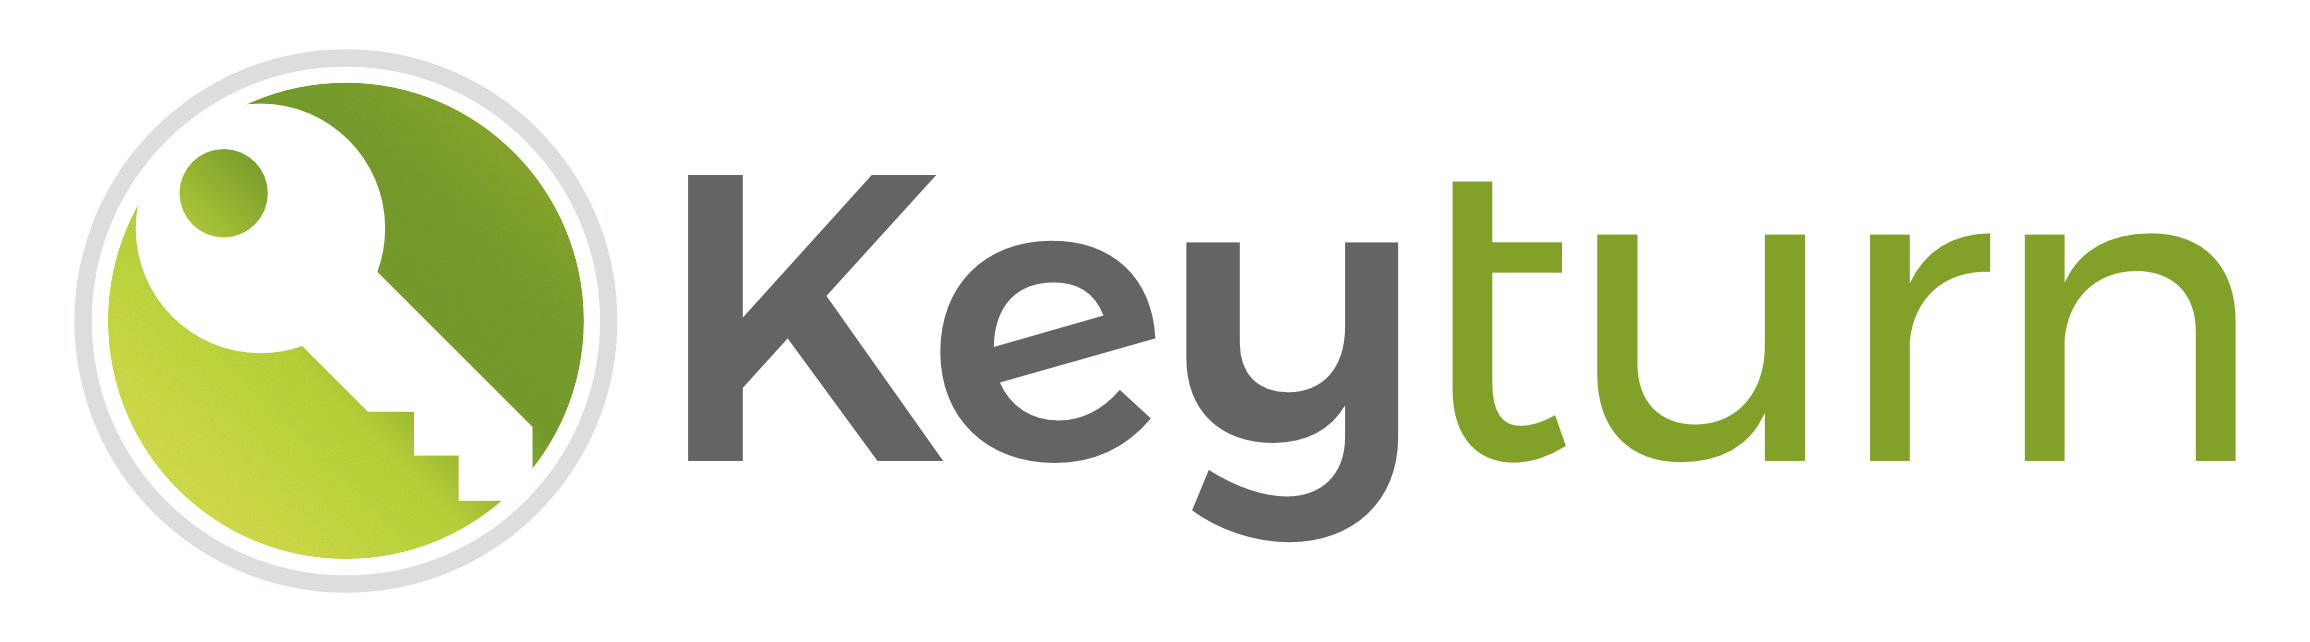 Keyturn | Management training programmes